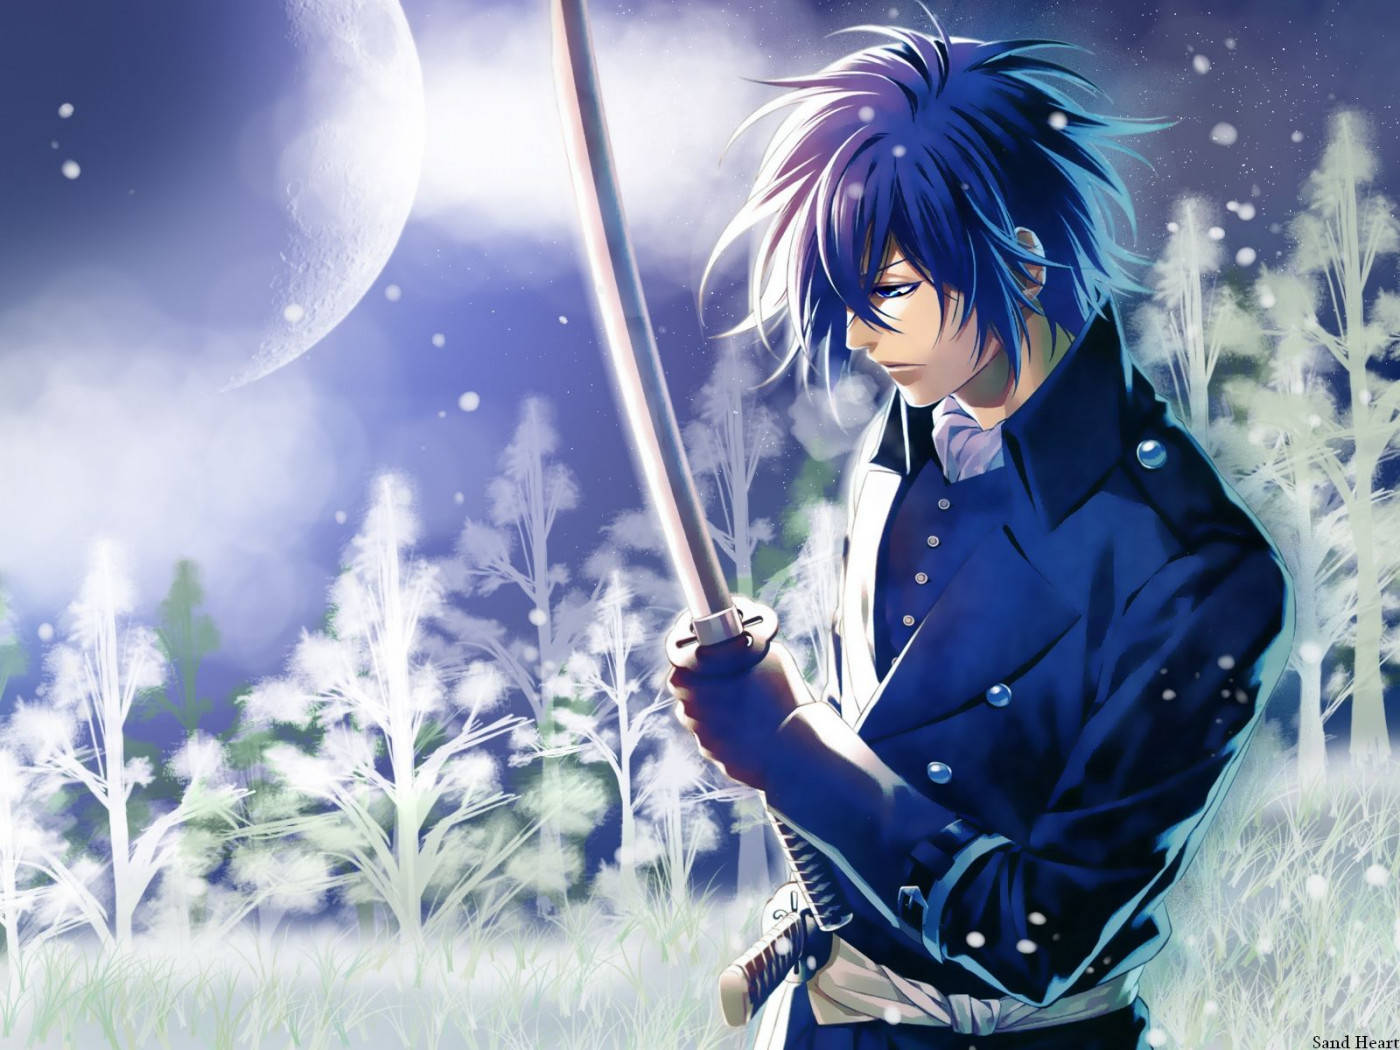 Anime Blue Boy In A Winter Forest Wallpaper